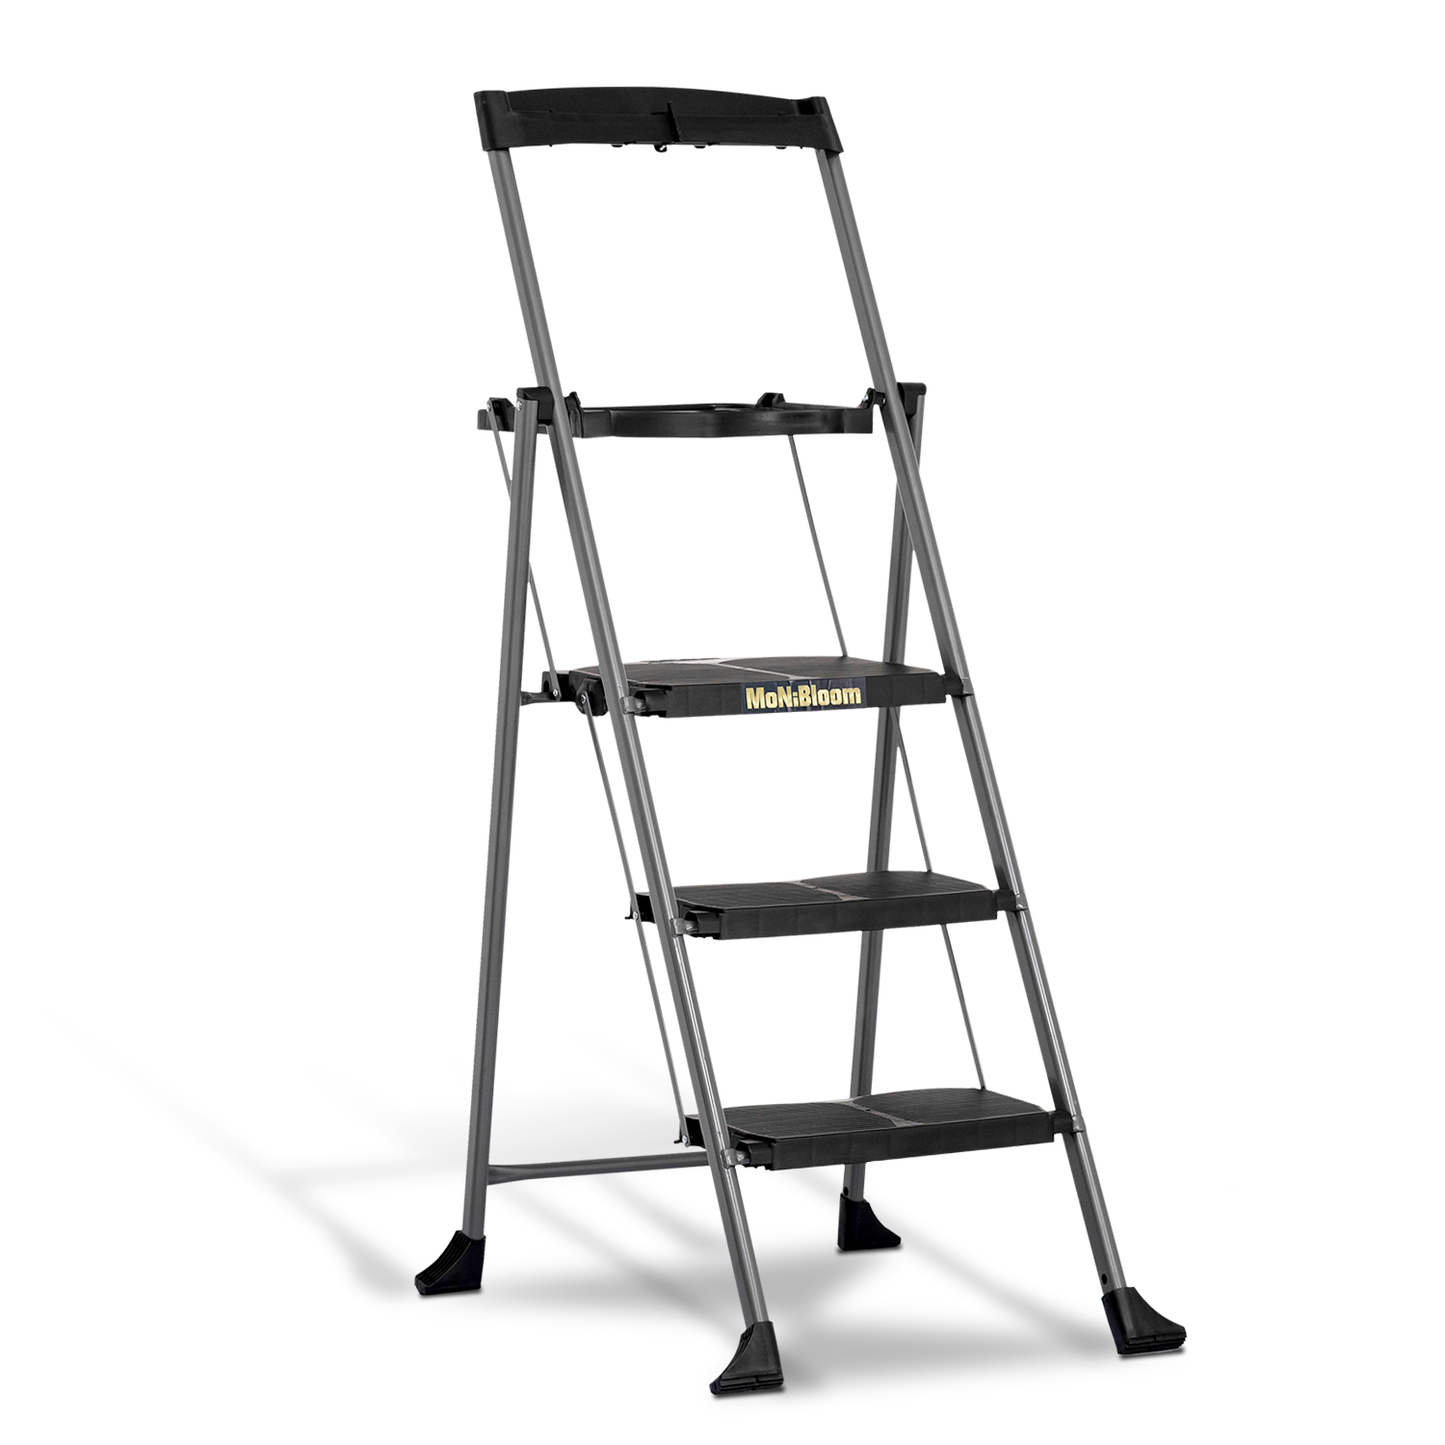 Tool Holder Handle Folding Step Ladder w/Tool Tray - 3 Steps 4.43 ft/53.1", Black